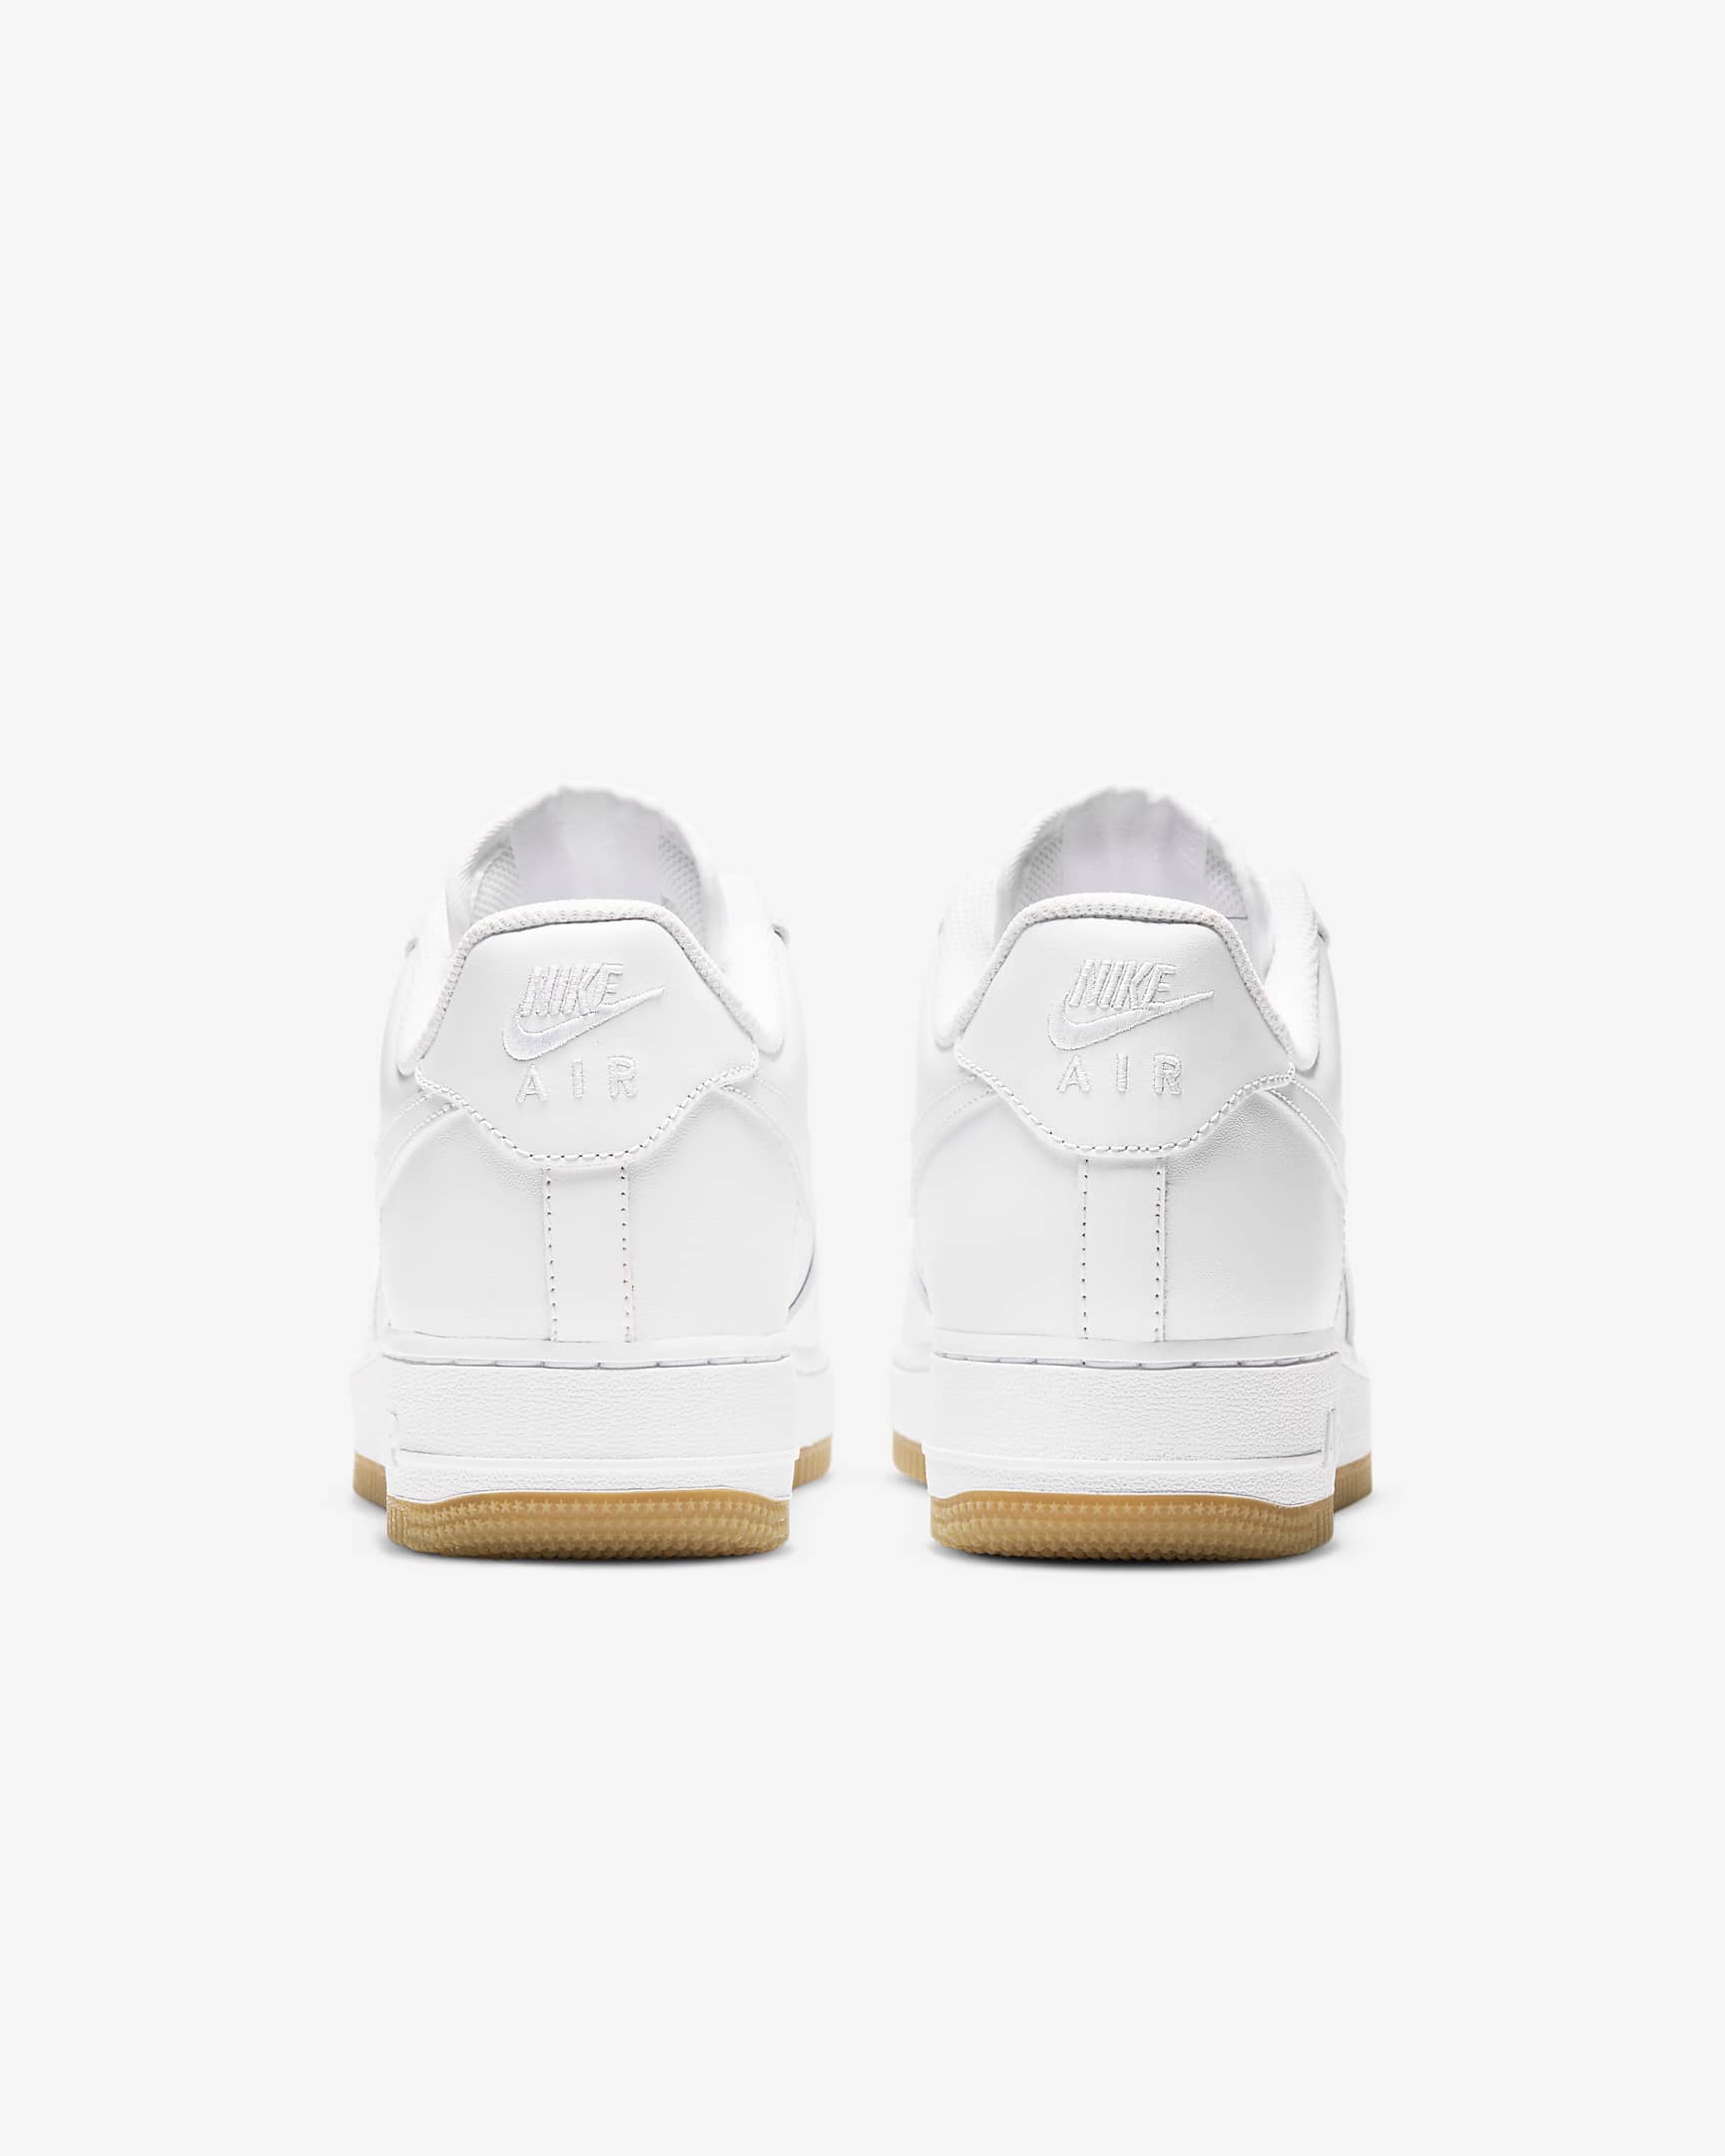 Nike Air Force 1 '07 Men's Shoes - White/Gum Light Brown/White